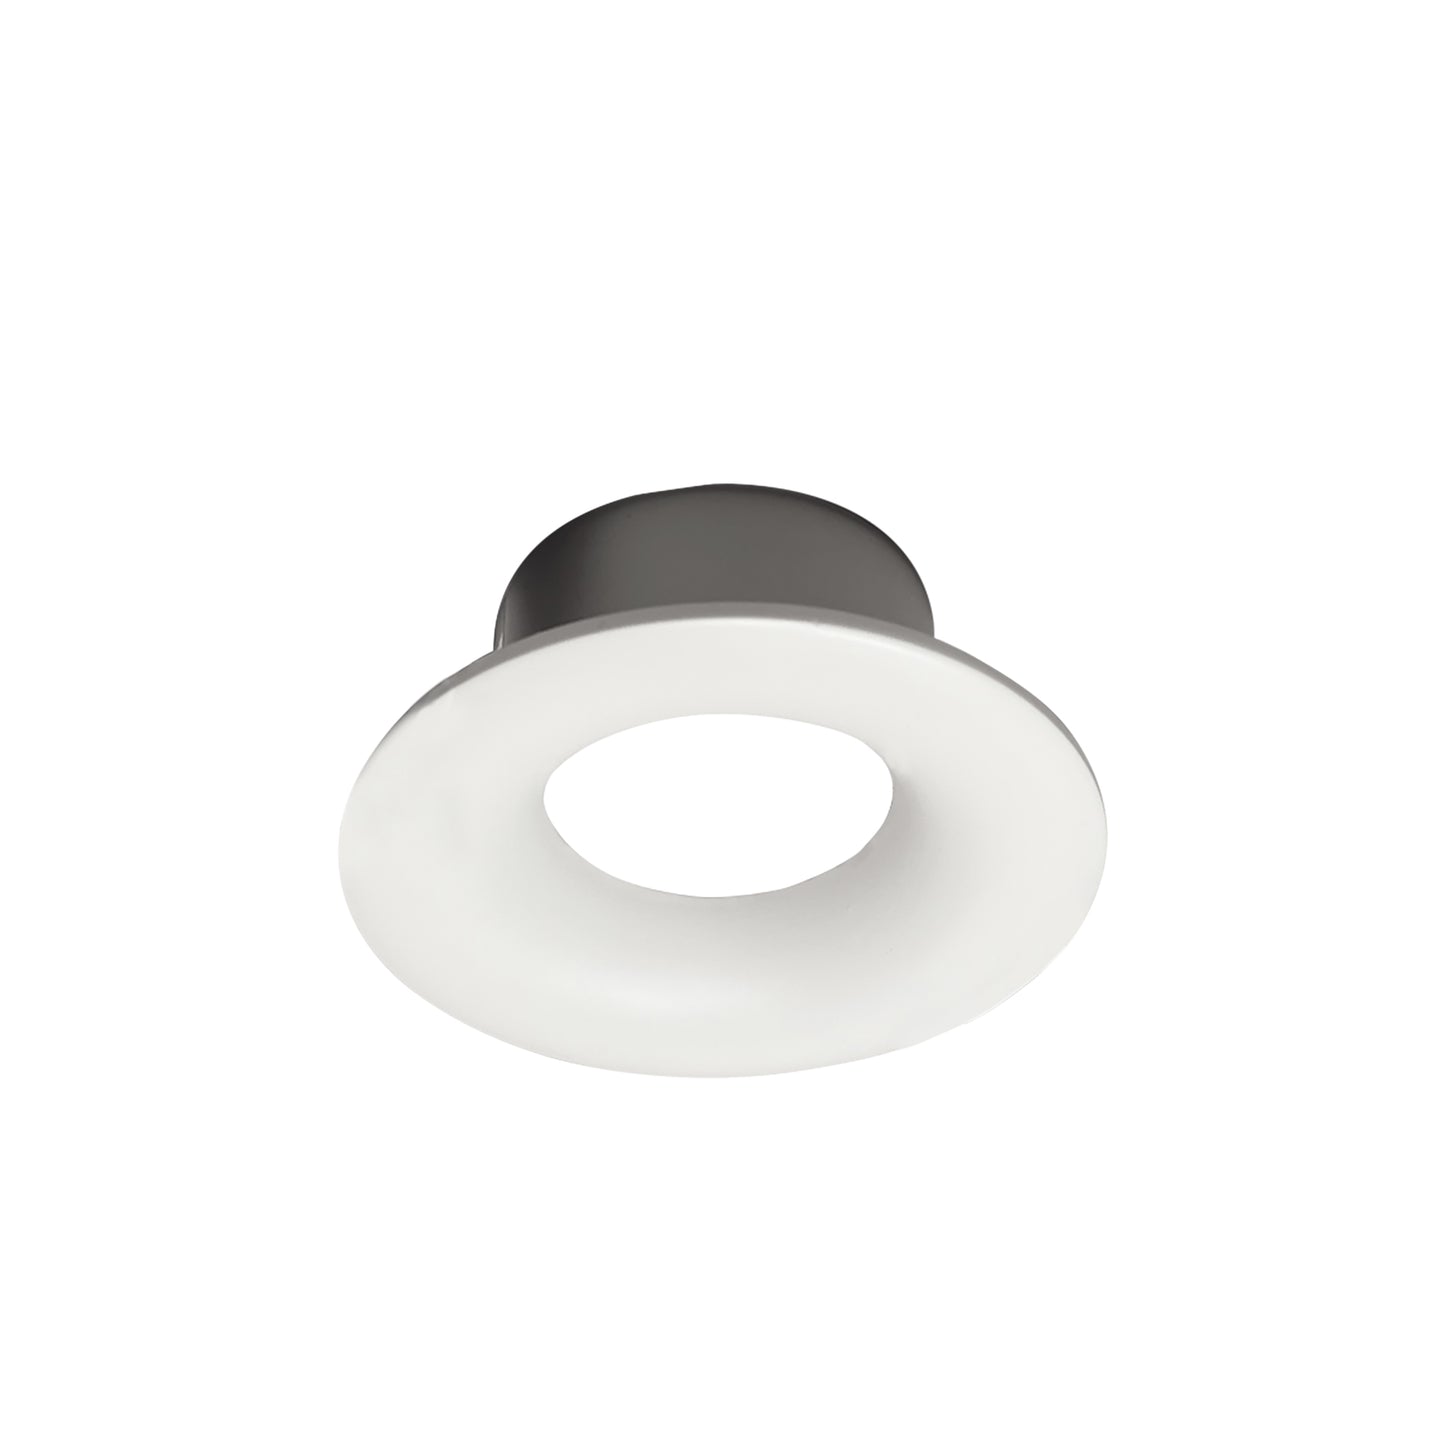 Nora Lighting 1-Inch Iolite LED Round Trim - Modern Ceiling Light